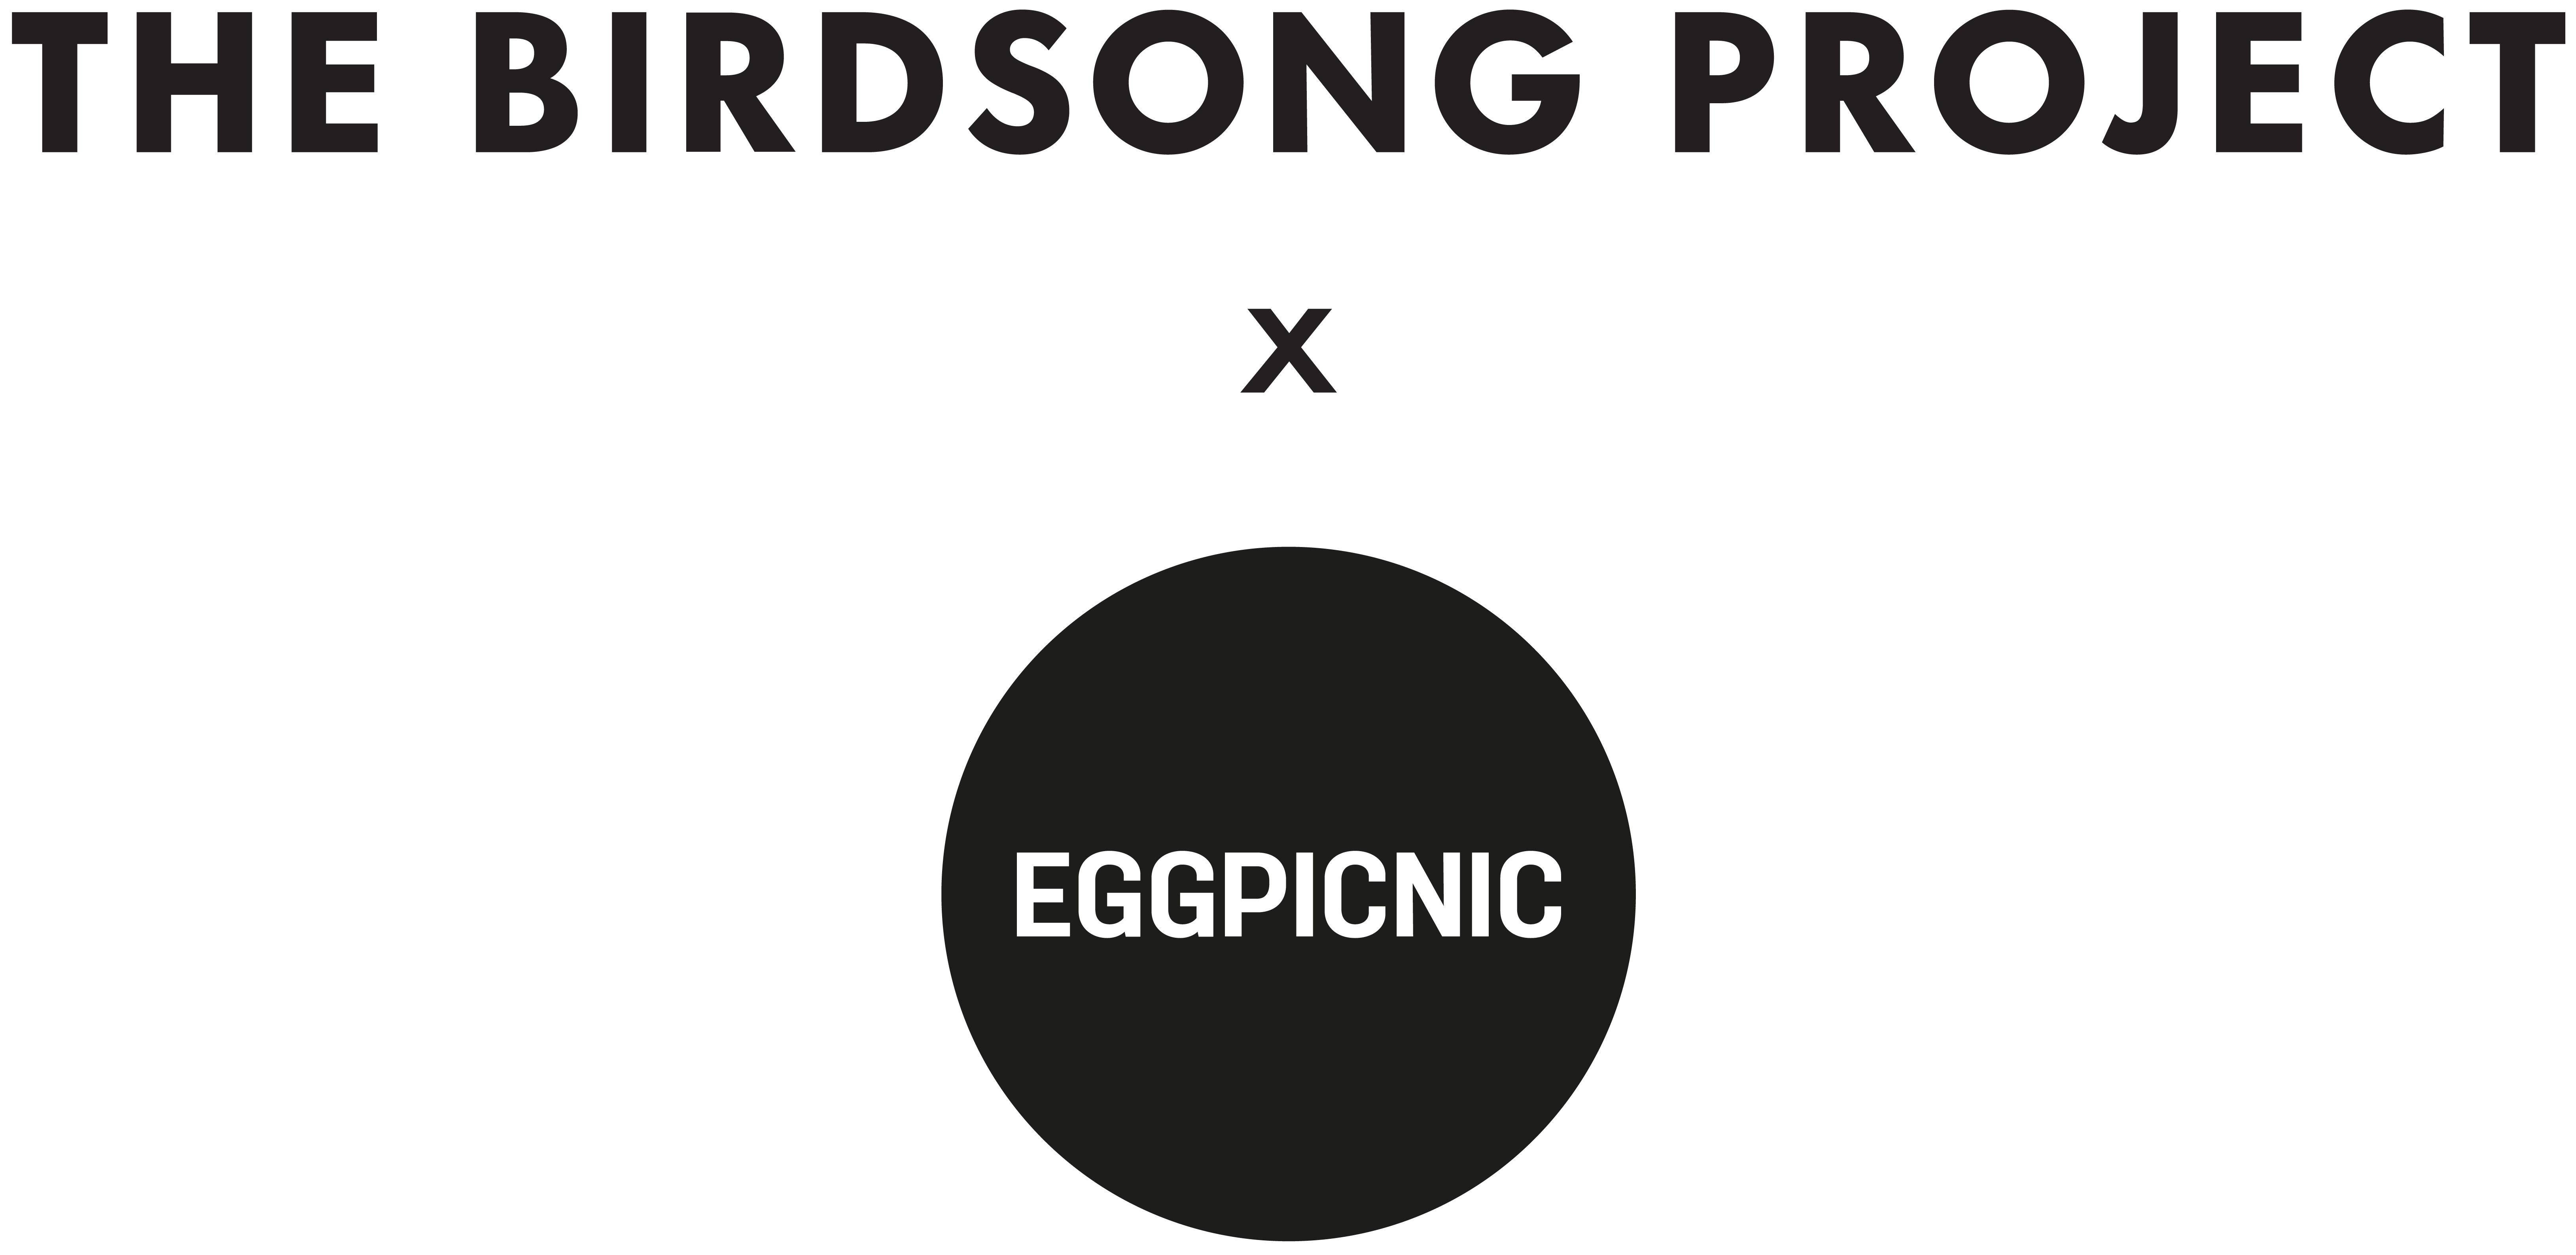 Eggpicnic x The Birdsong Project